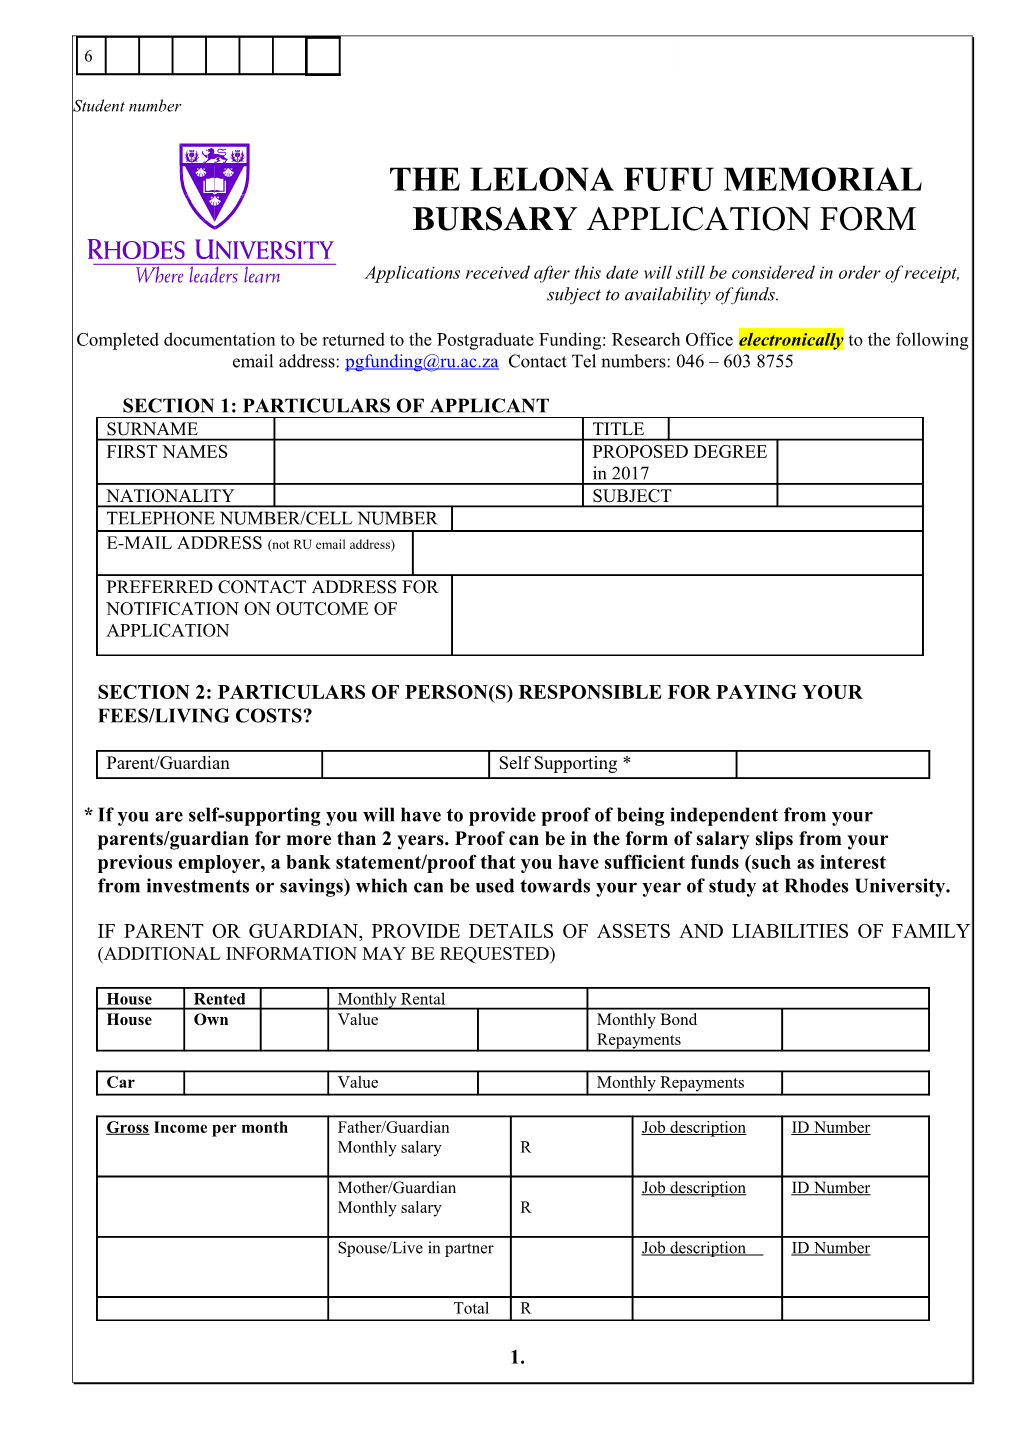 The Lelona Fufu Memorial Bursary Application Form